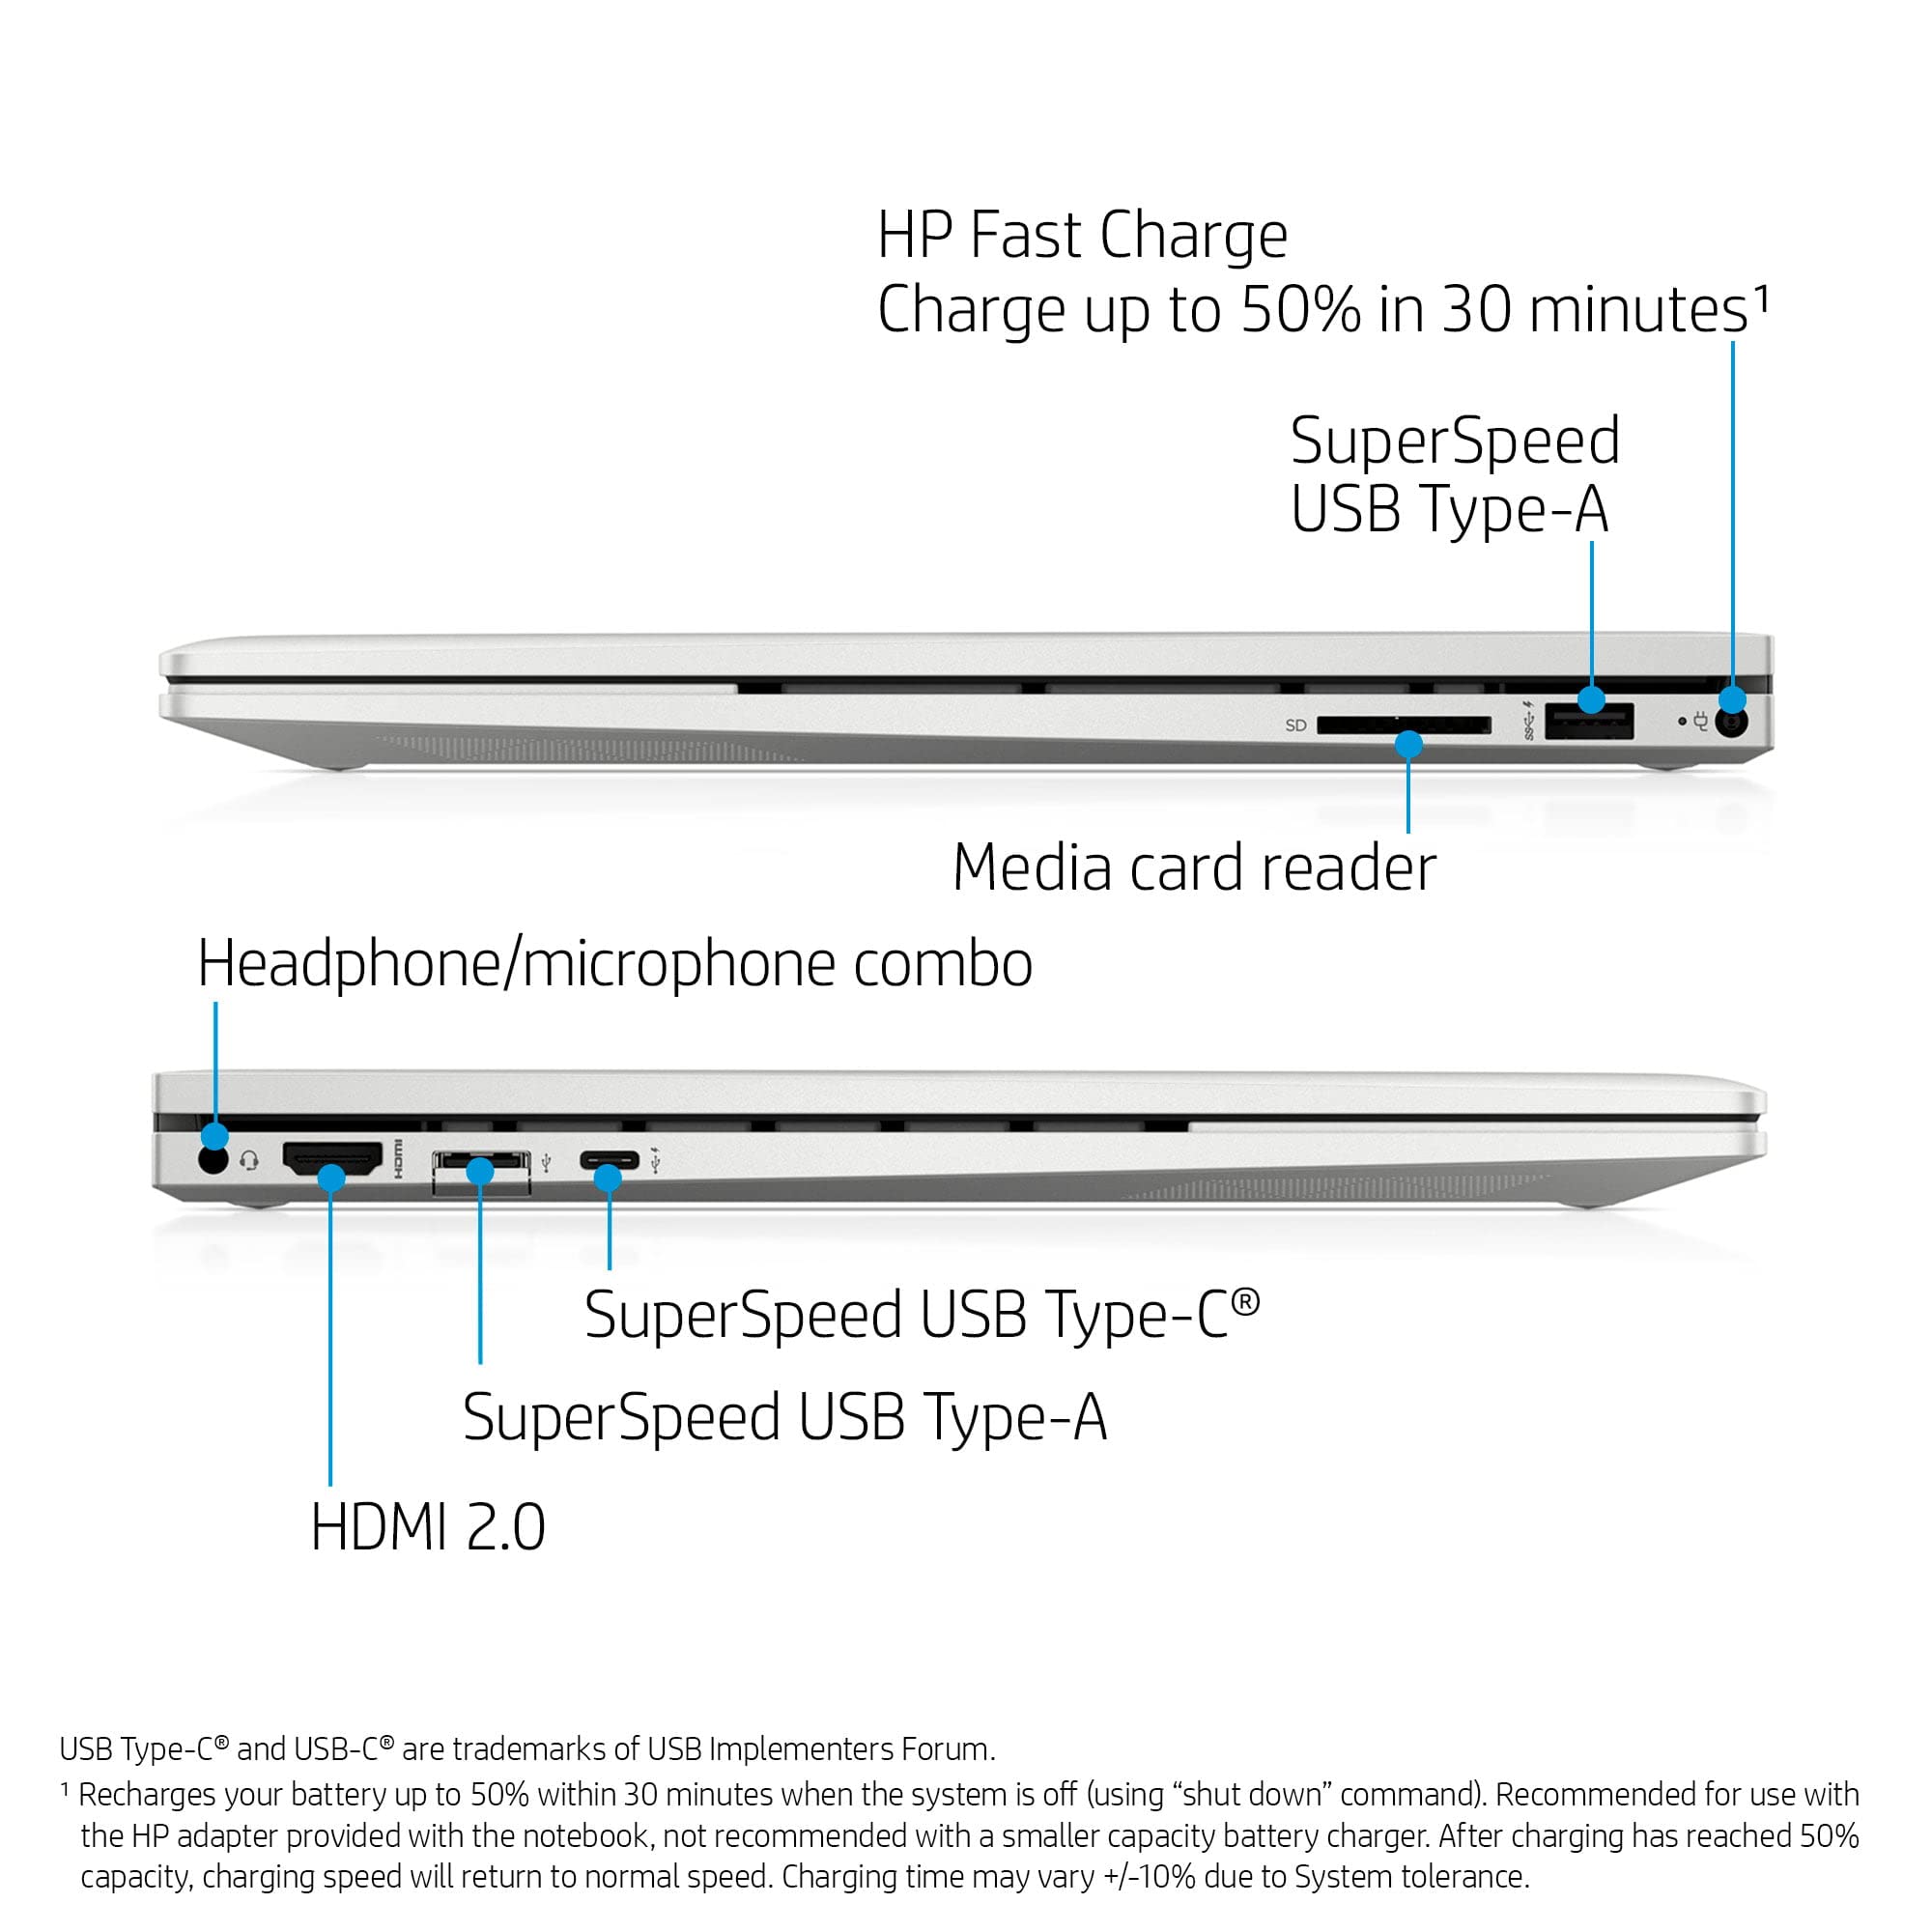 HP Newest Envy x360 Convert 15.6" FHD IPS Touchscreen Premium 2-in-1 Laptop, 11th Gen Intel Quad-Core i5-1135G7, 16GB RAM, 2TB PCIe SSD, Backlit Keyboard, Fingerprint, Windows 10 Home + HDMI Cable